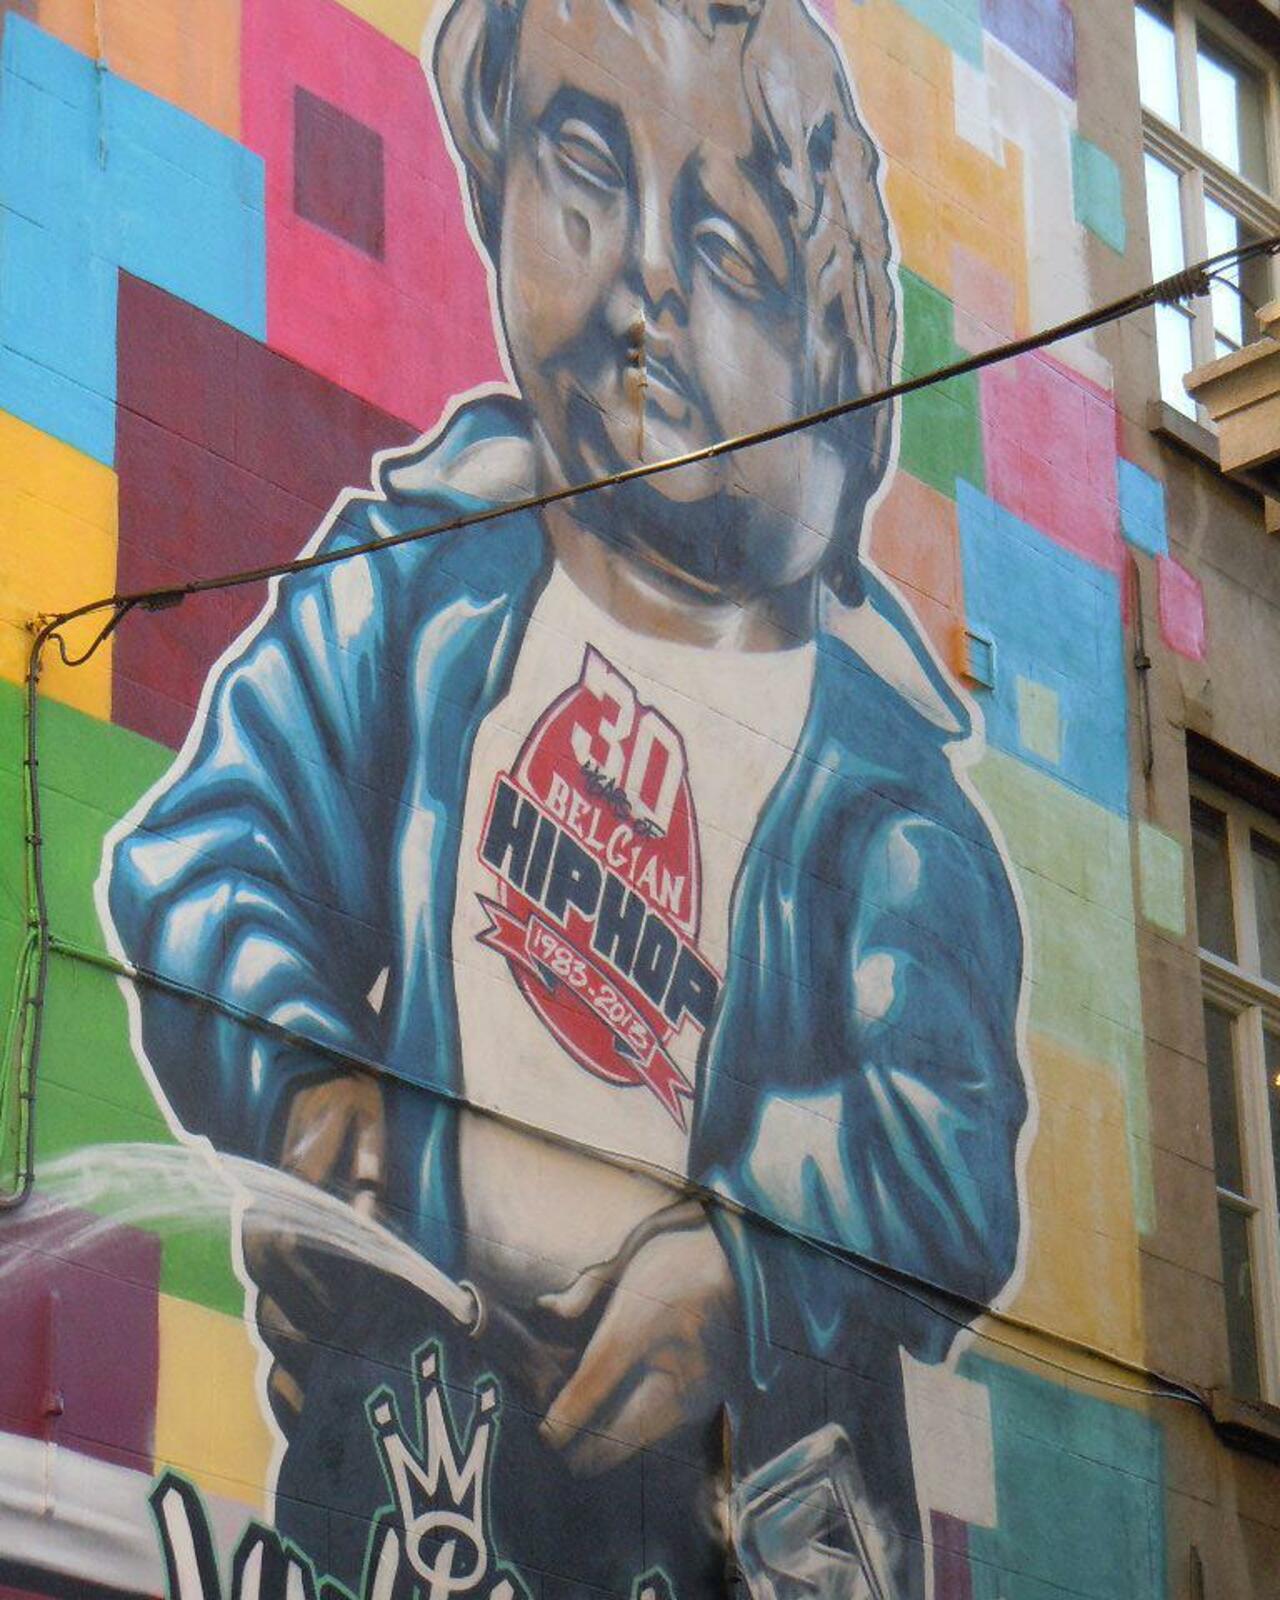 #Paris #graffiti photo by @le_cyclopede http://ift.tt/1VVE2h4 #StreetArt http://t.co/5pJssEZPqW